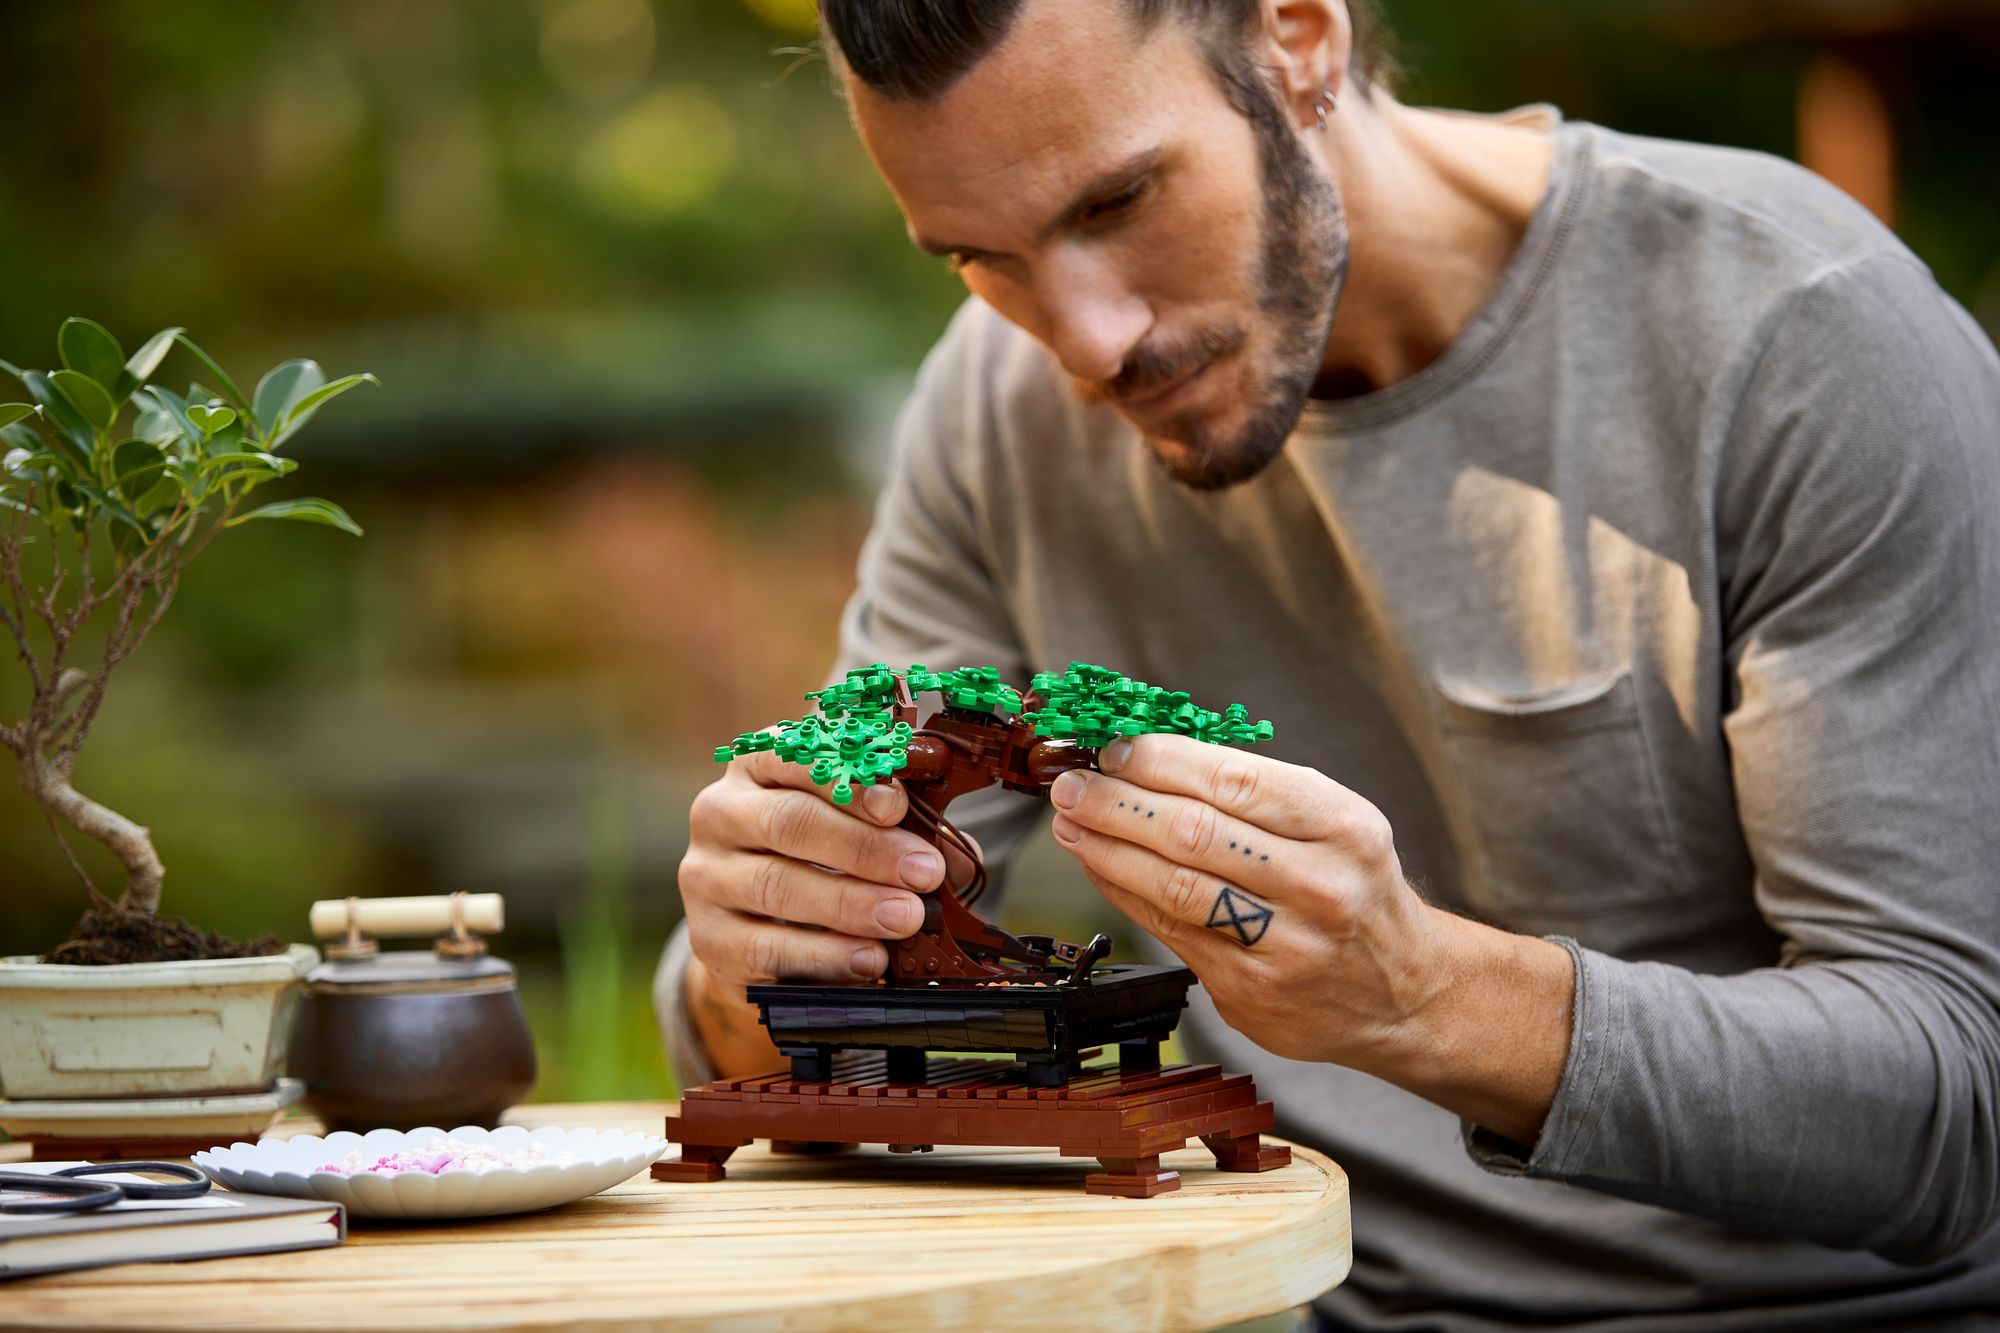 LEGO Bonsai Tree Review